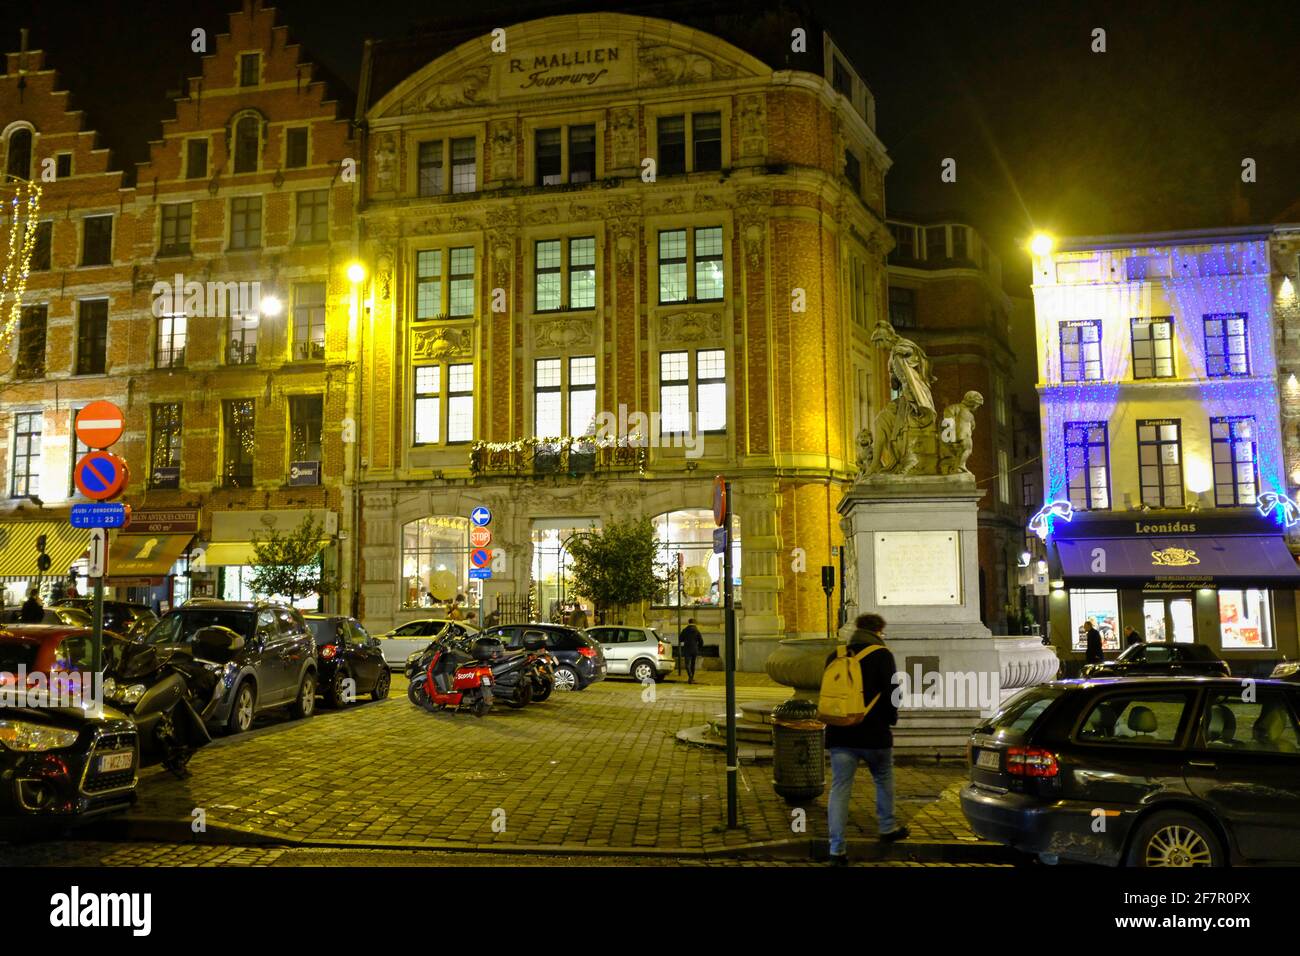 14.12.2019, Bruessel, Belgien - historische Hausfassaden am noblen Platz Grand Sablon in Bruessel bei Nacht Stock Photo